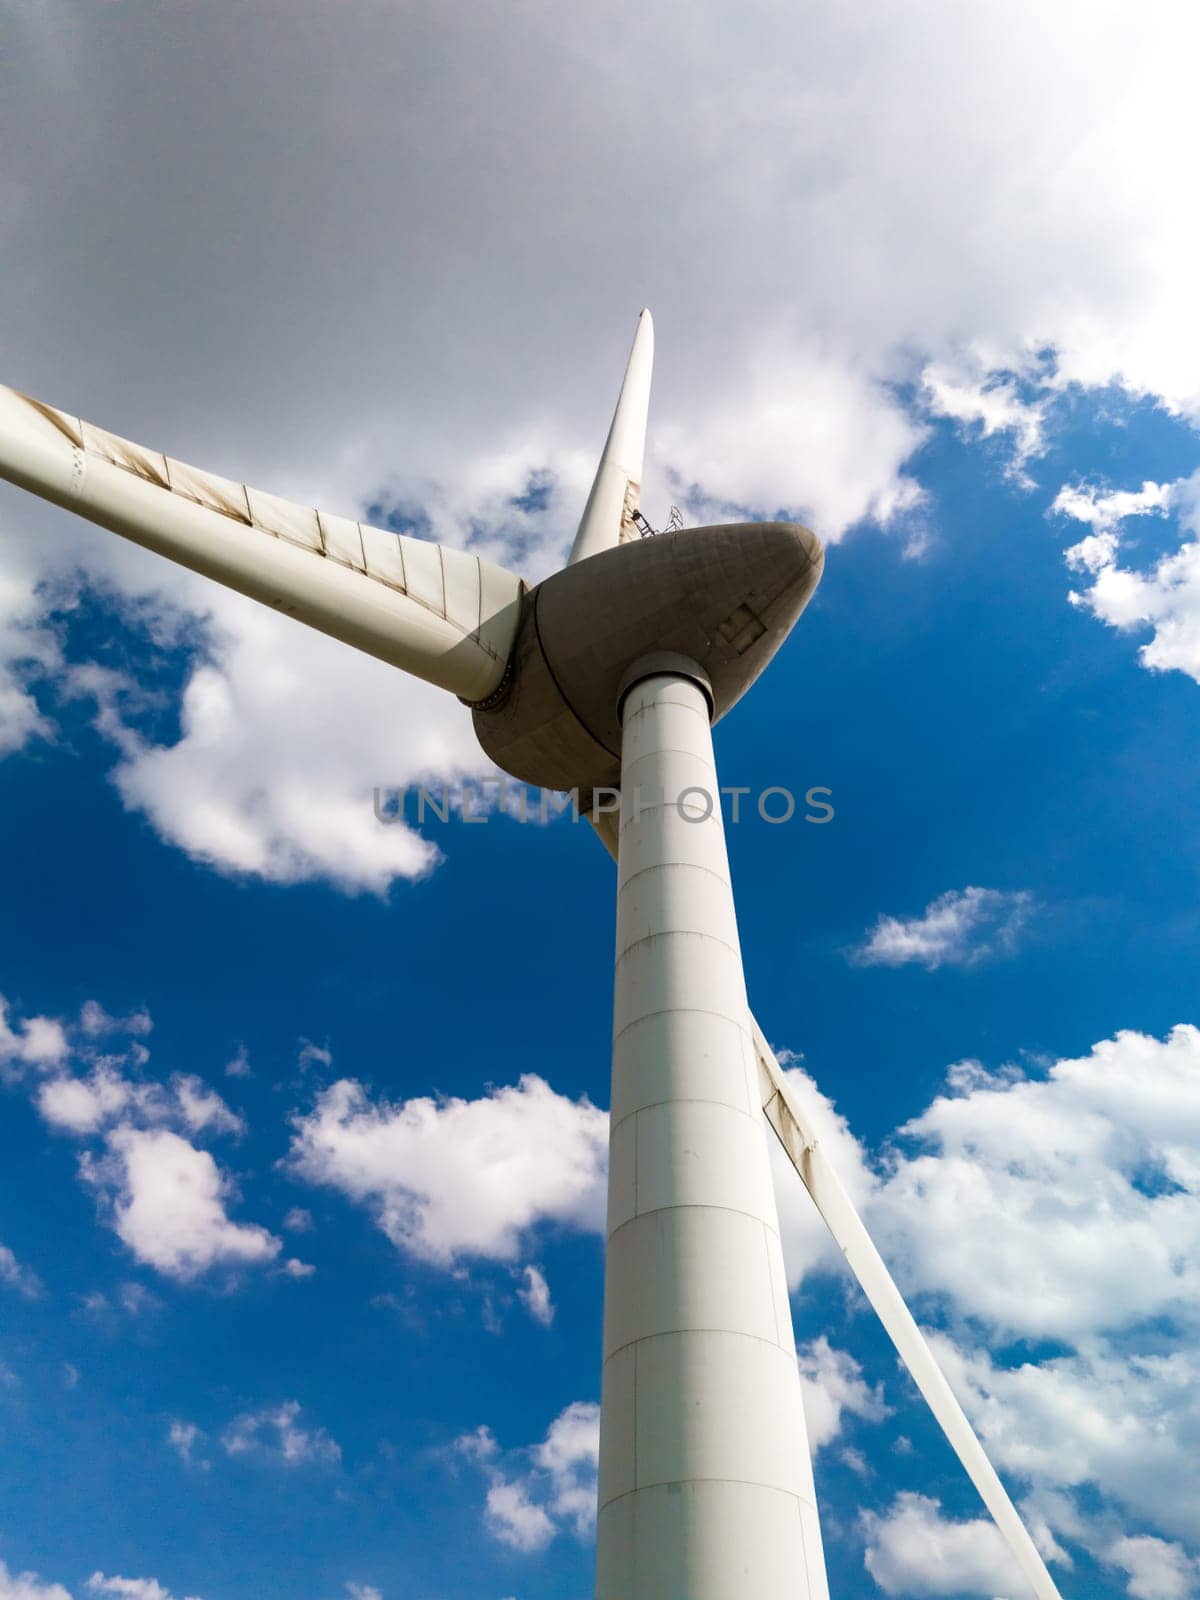 A wind turbine gracefully spins against a vibrant blue sky backdrop in Flevoland, Netherlands by fokkebok